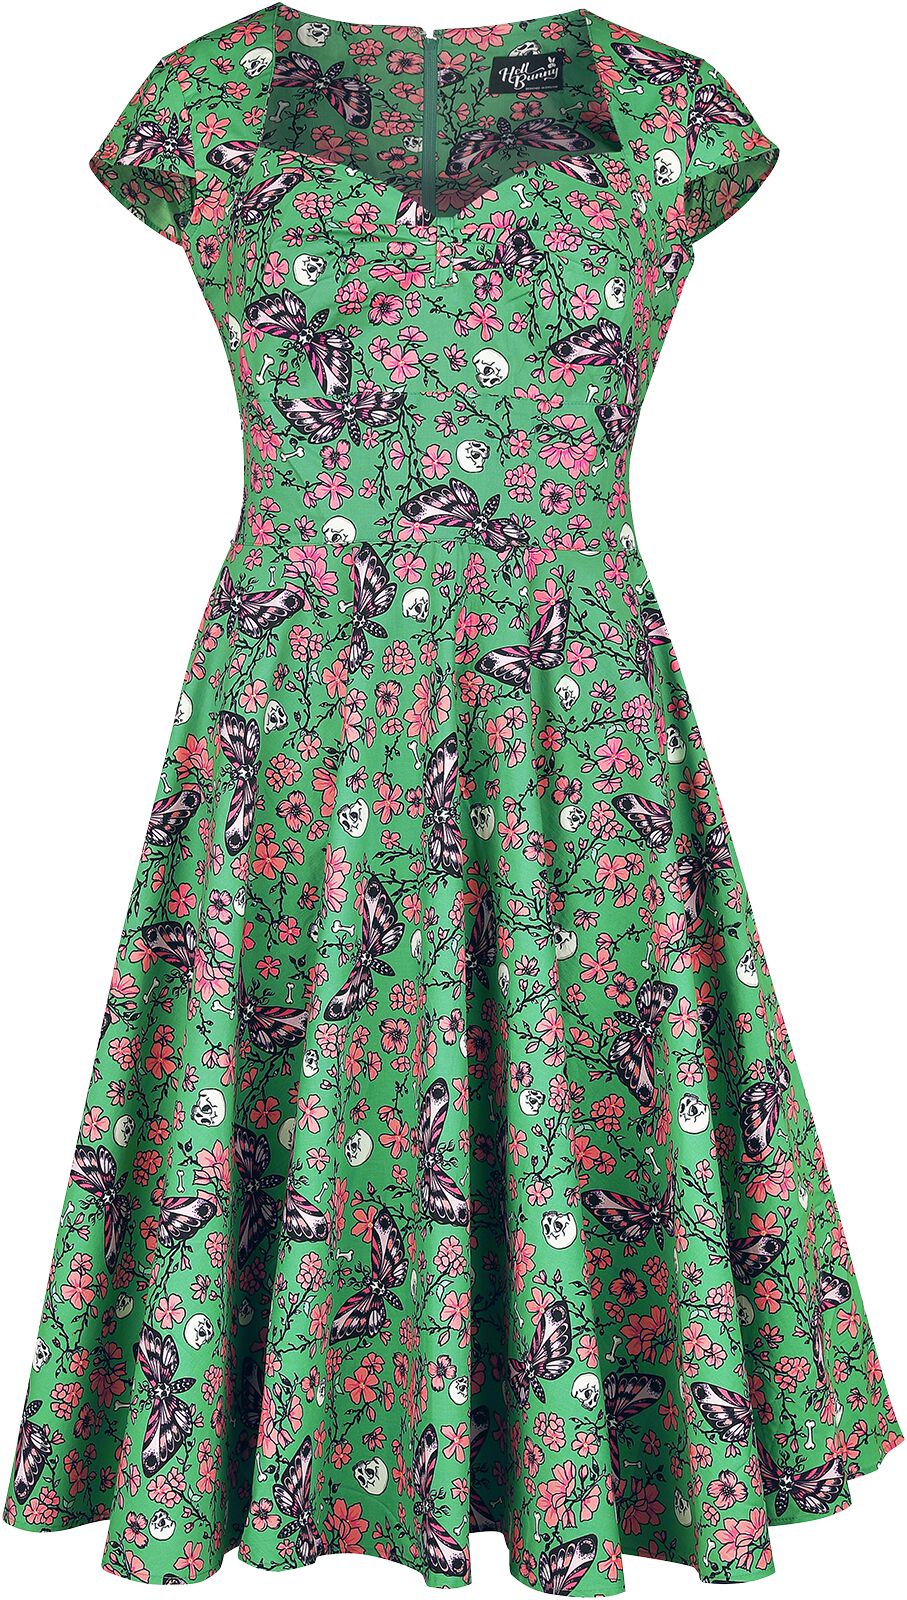 Robe mi-longue de Hell Bunny - Madilynn Dress - XS à 4XL - pour Femme - vert/rose